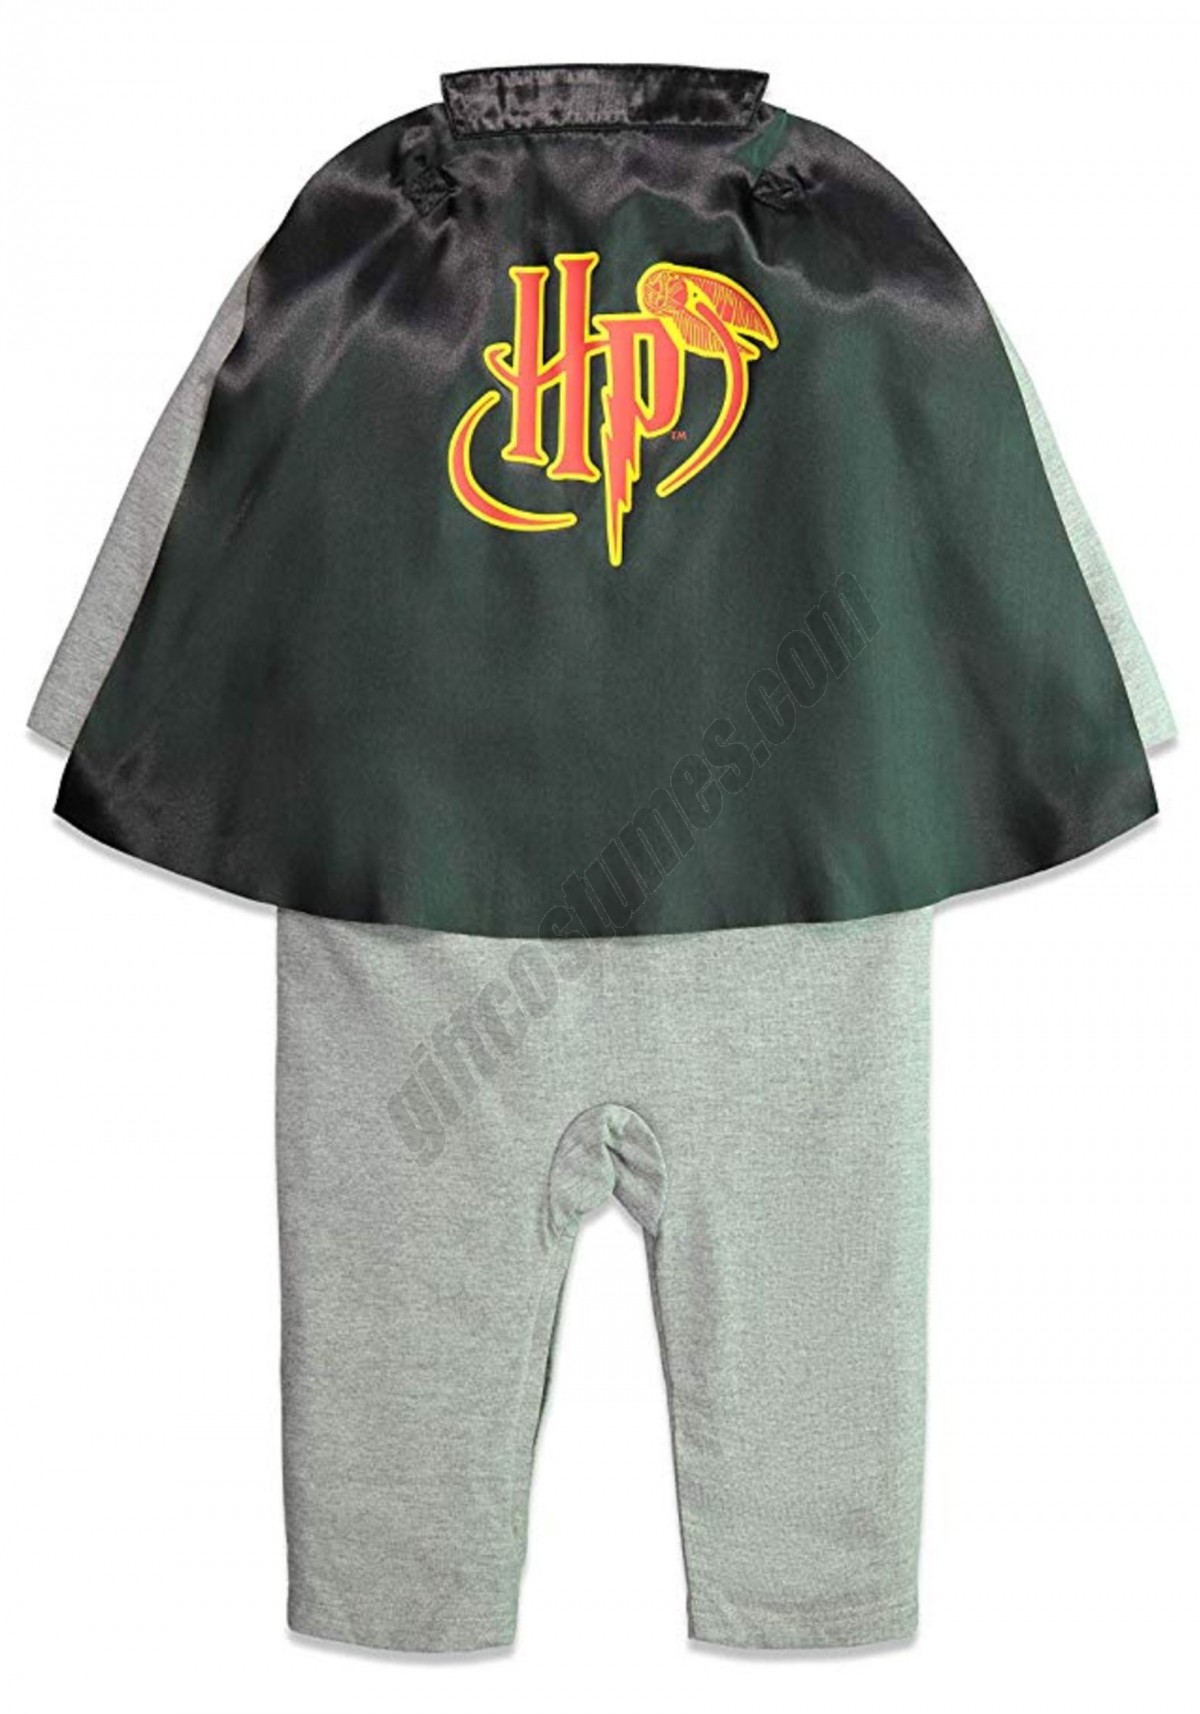 Infant Boys Harry Potter Dressup Costume Overalls Promotions - -1